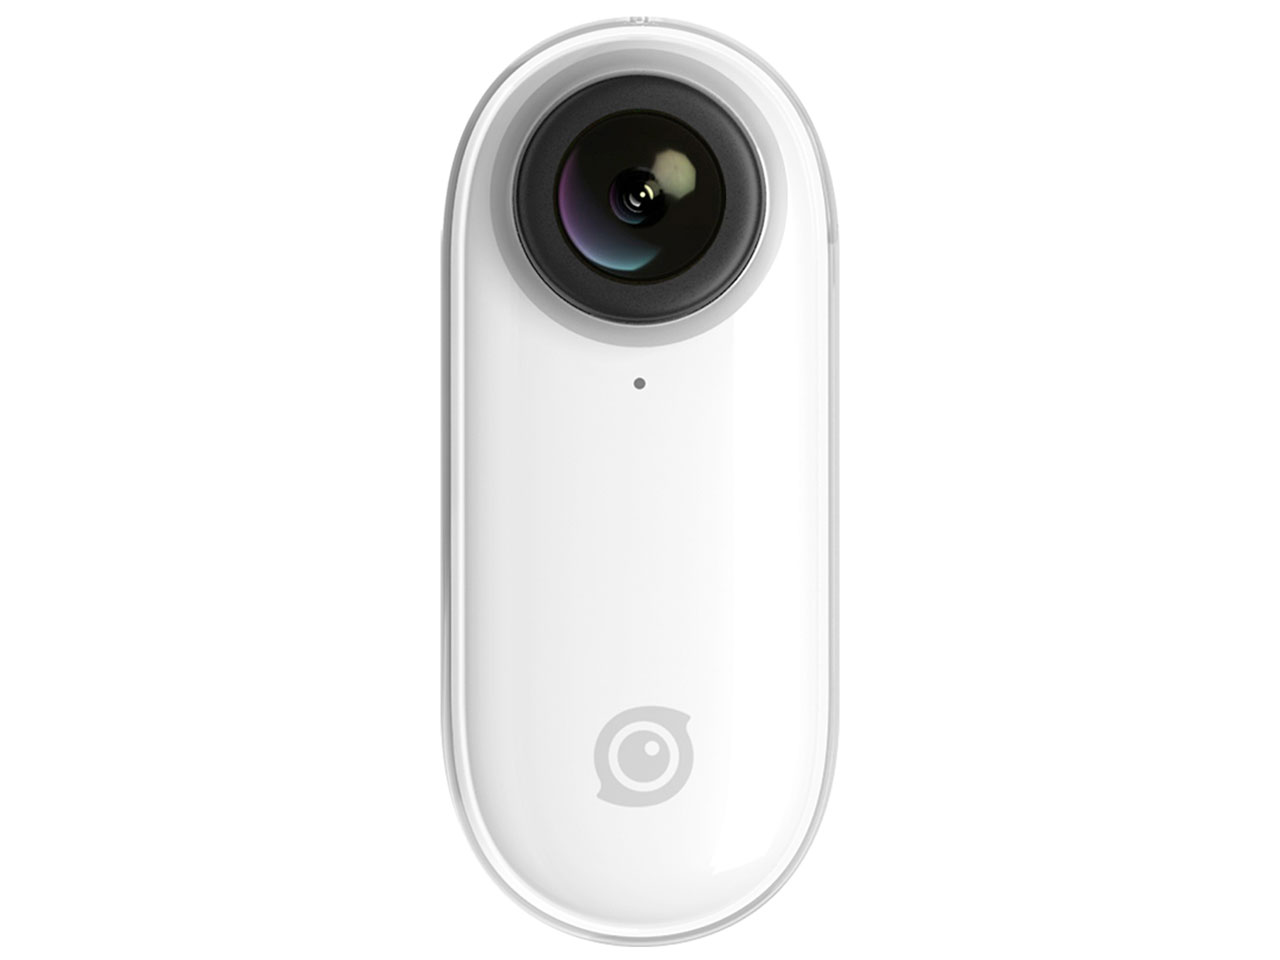 Insta360 Go / Insta360 GO 2 crée la plus petite caméra d'action ... : The insta360 go is a compact 1080p hd camera that has impressive image stabilization feature.